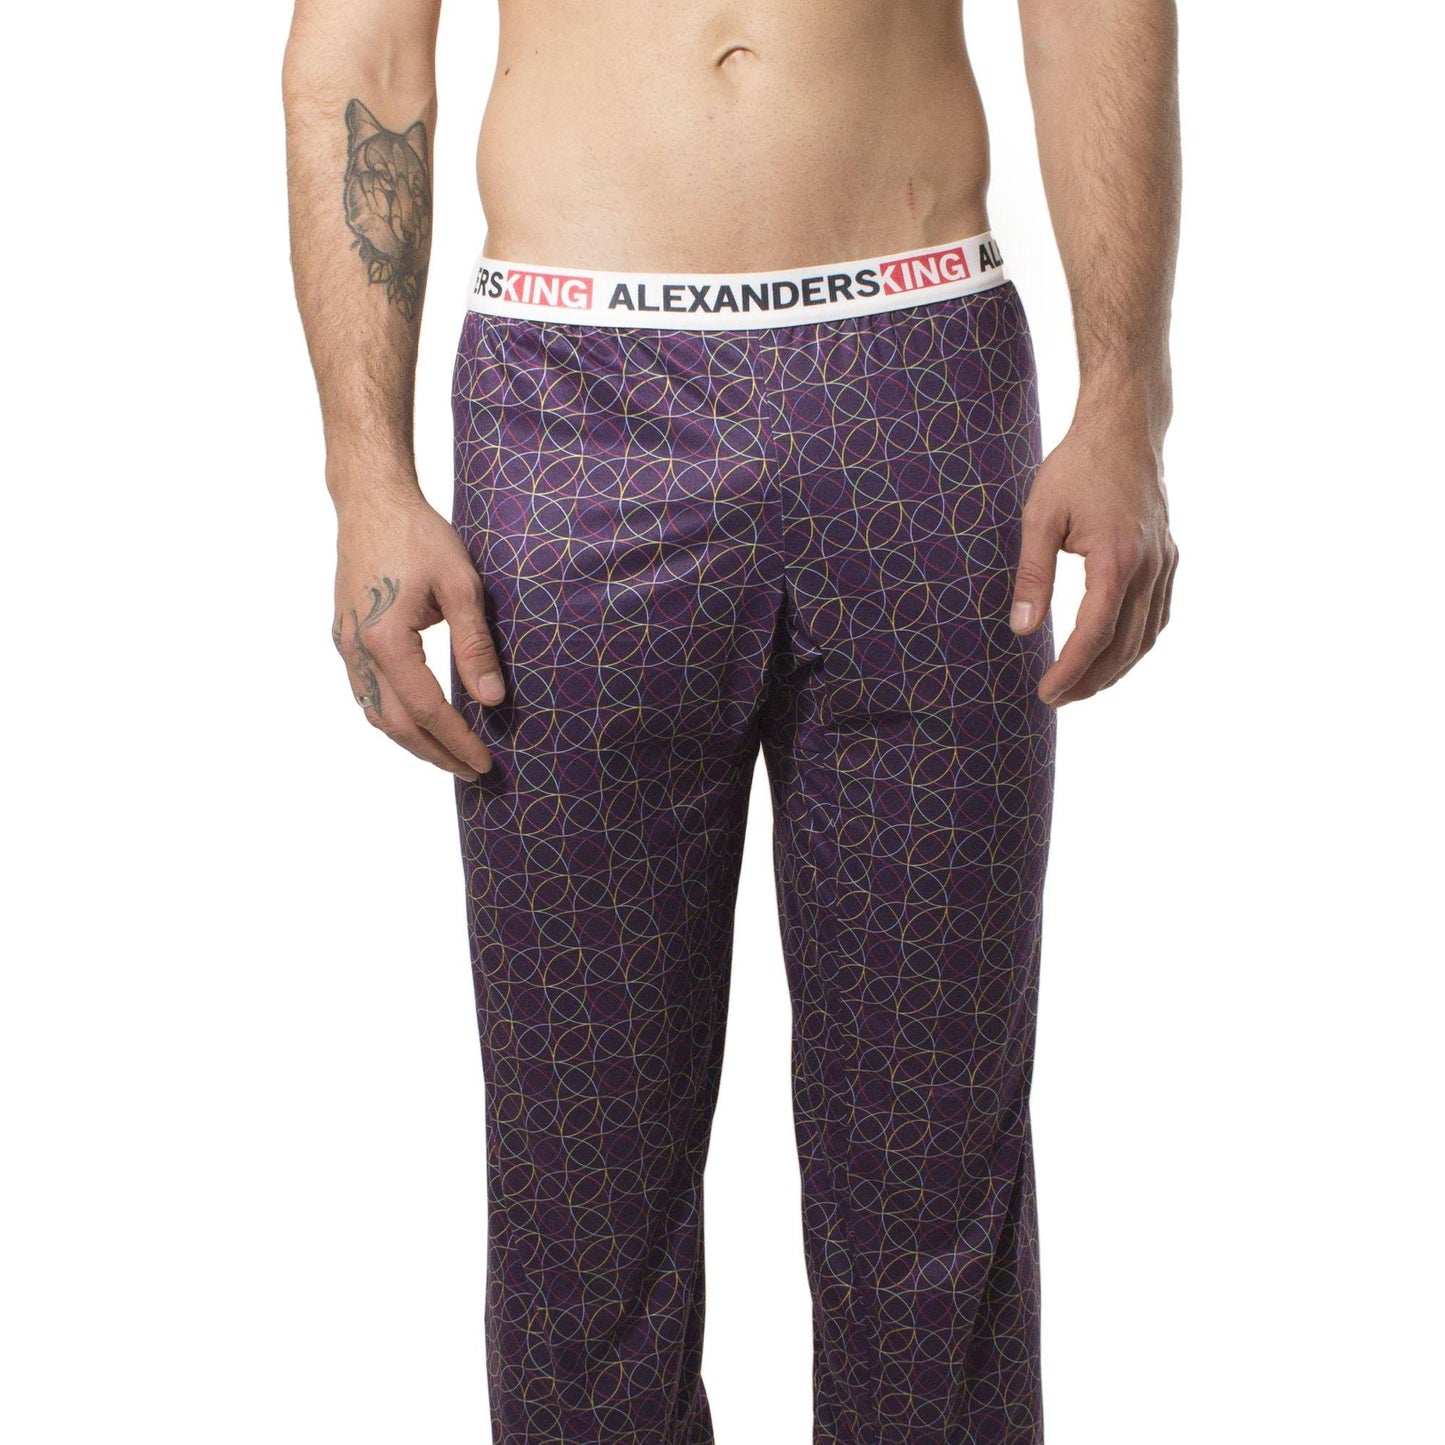 PP0008 - Pantalón Pijama Porygon - AlexandersKing Underwear